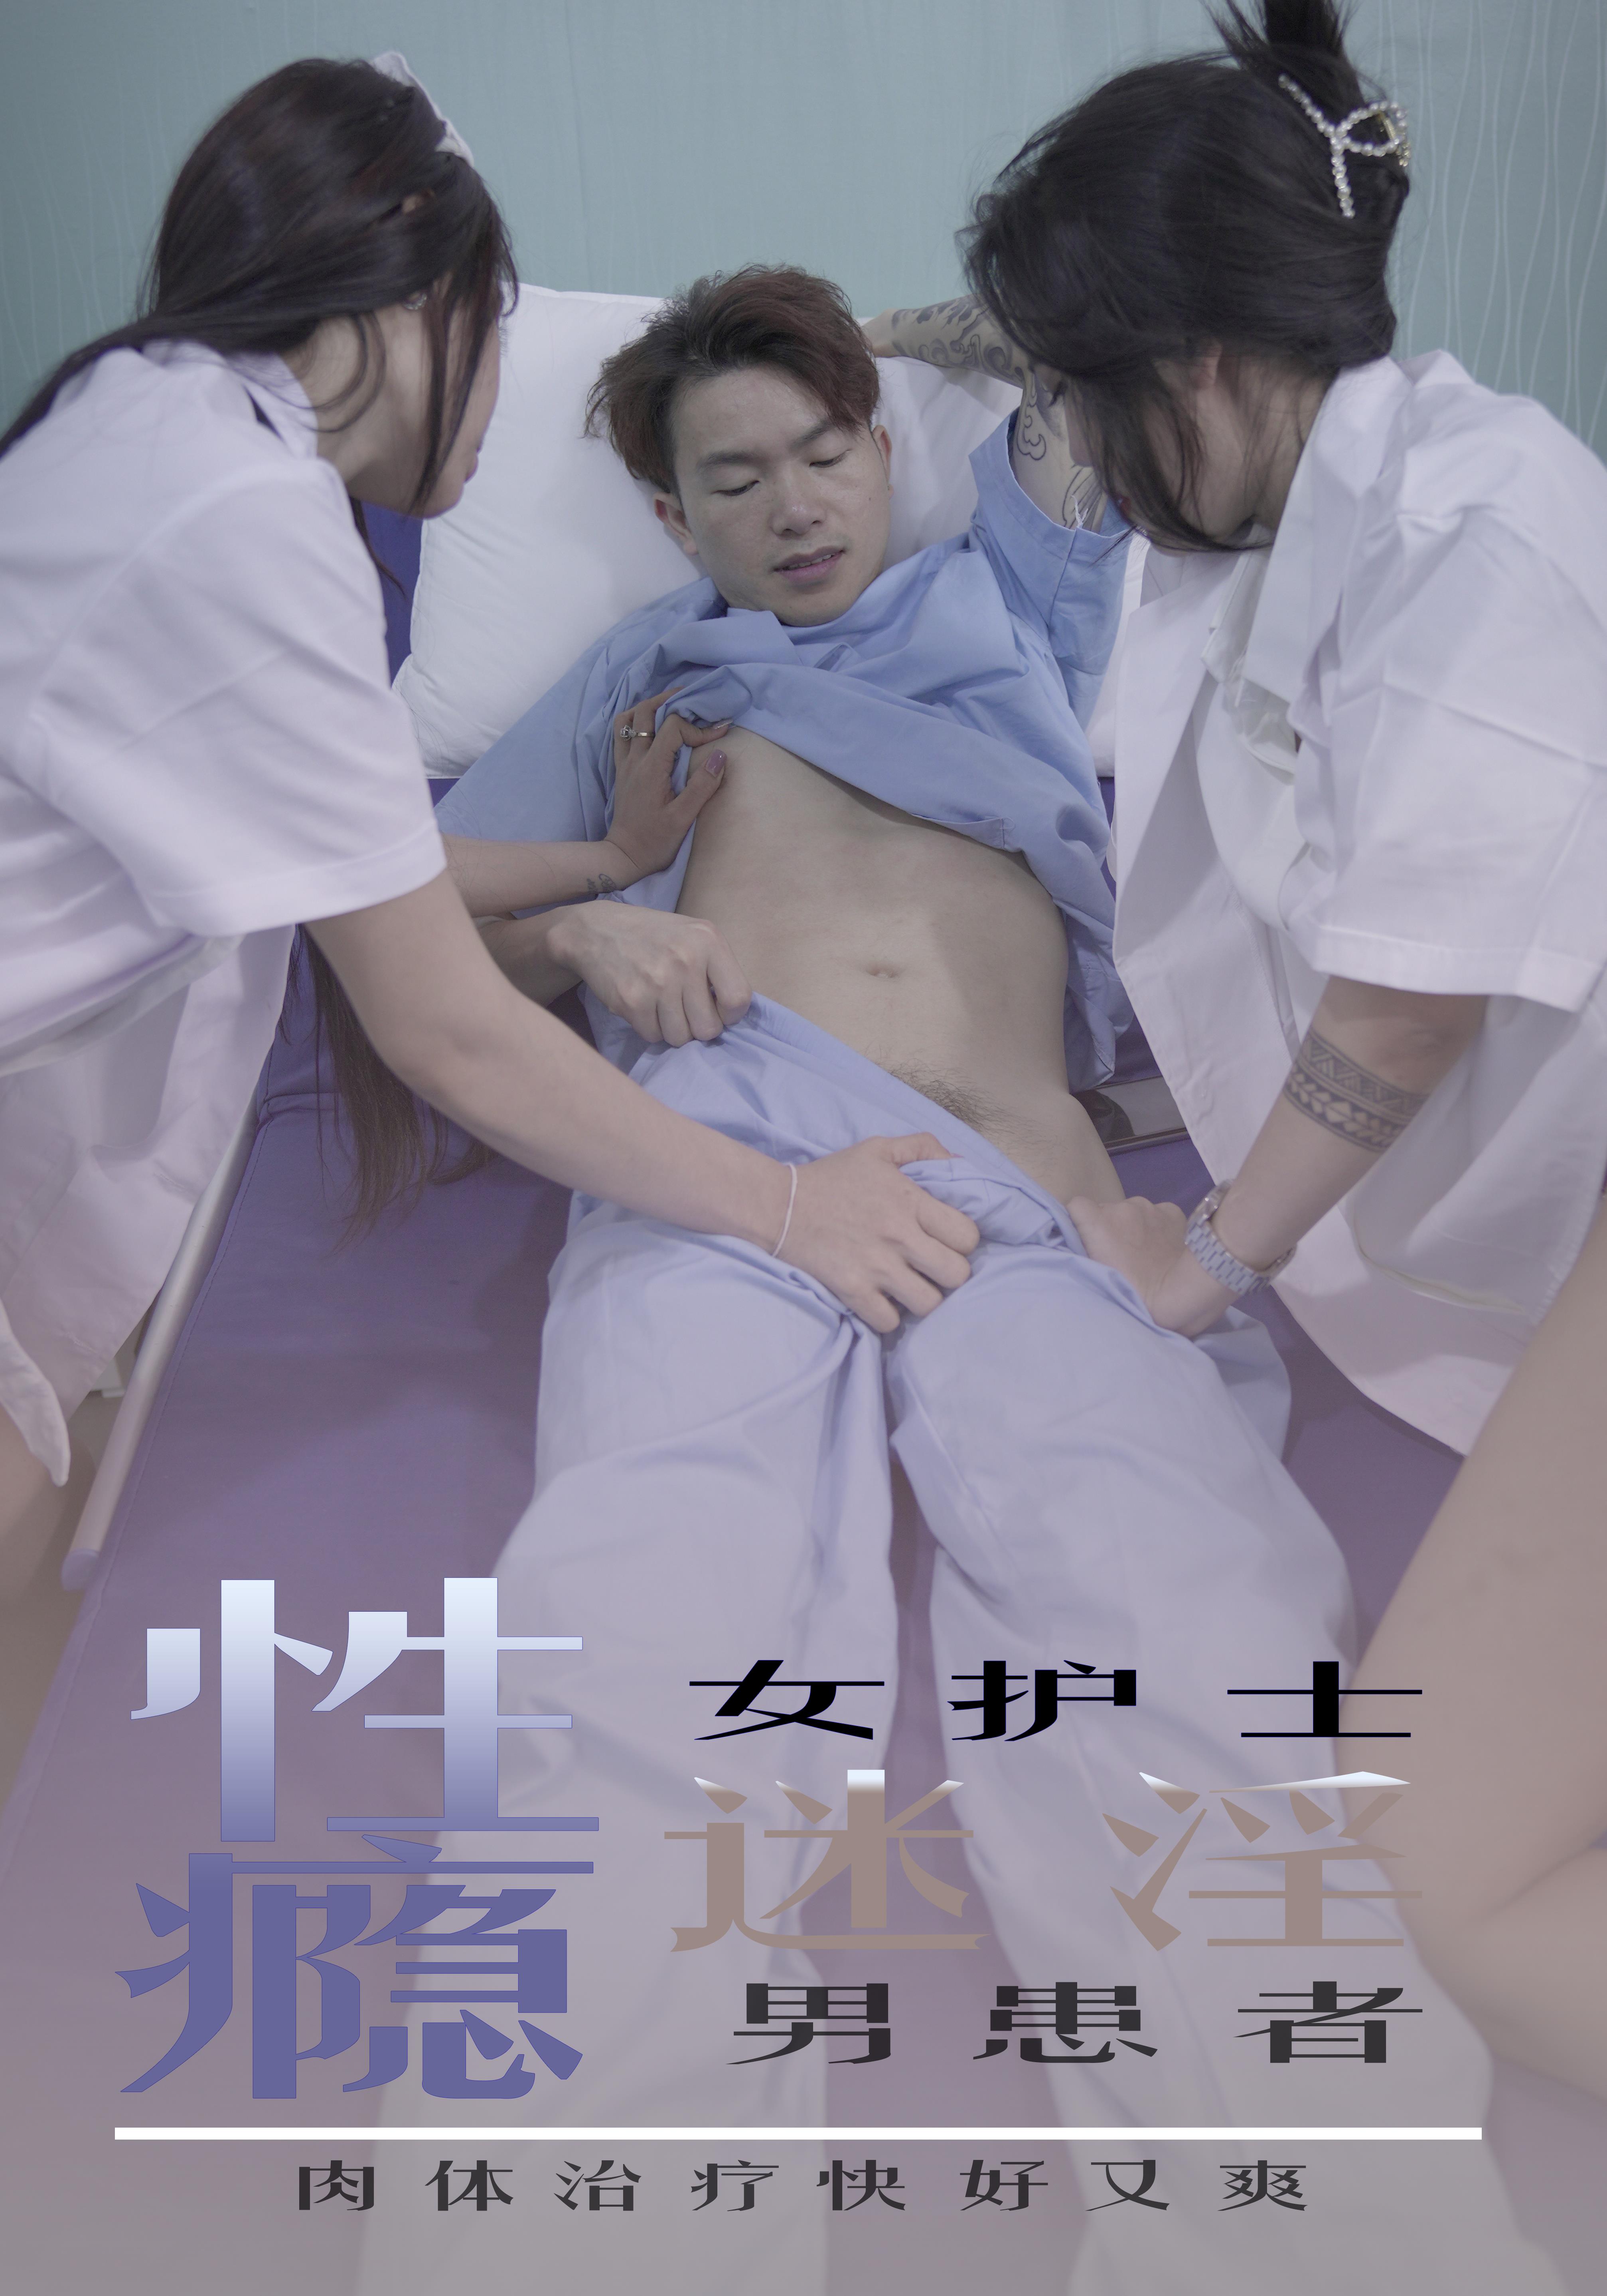 69FILMS1021 - 性瘾女护士迷淫男患者